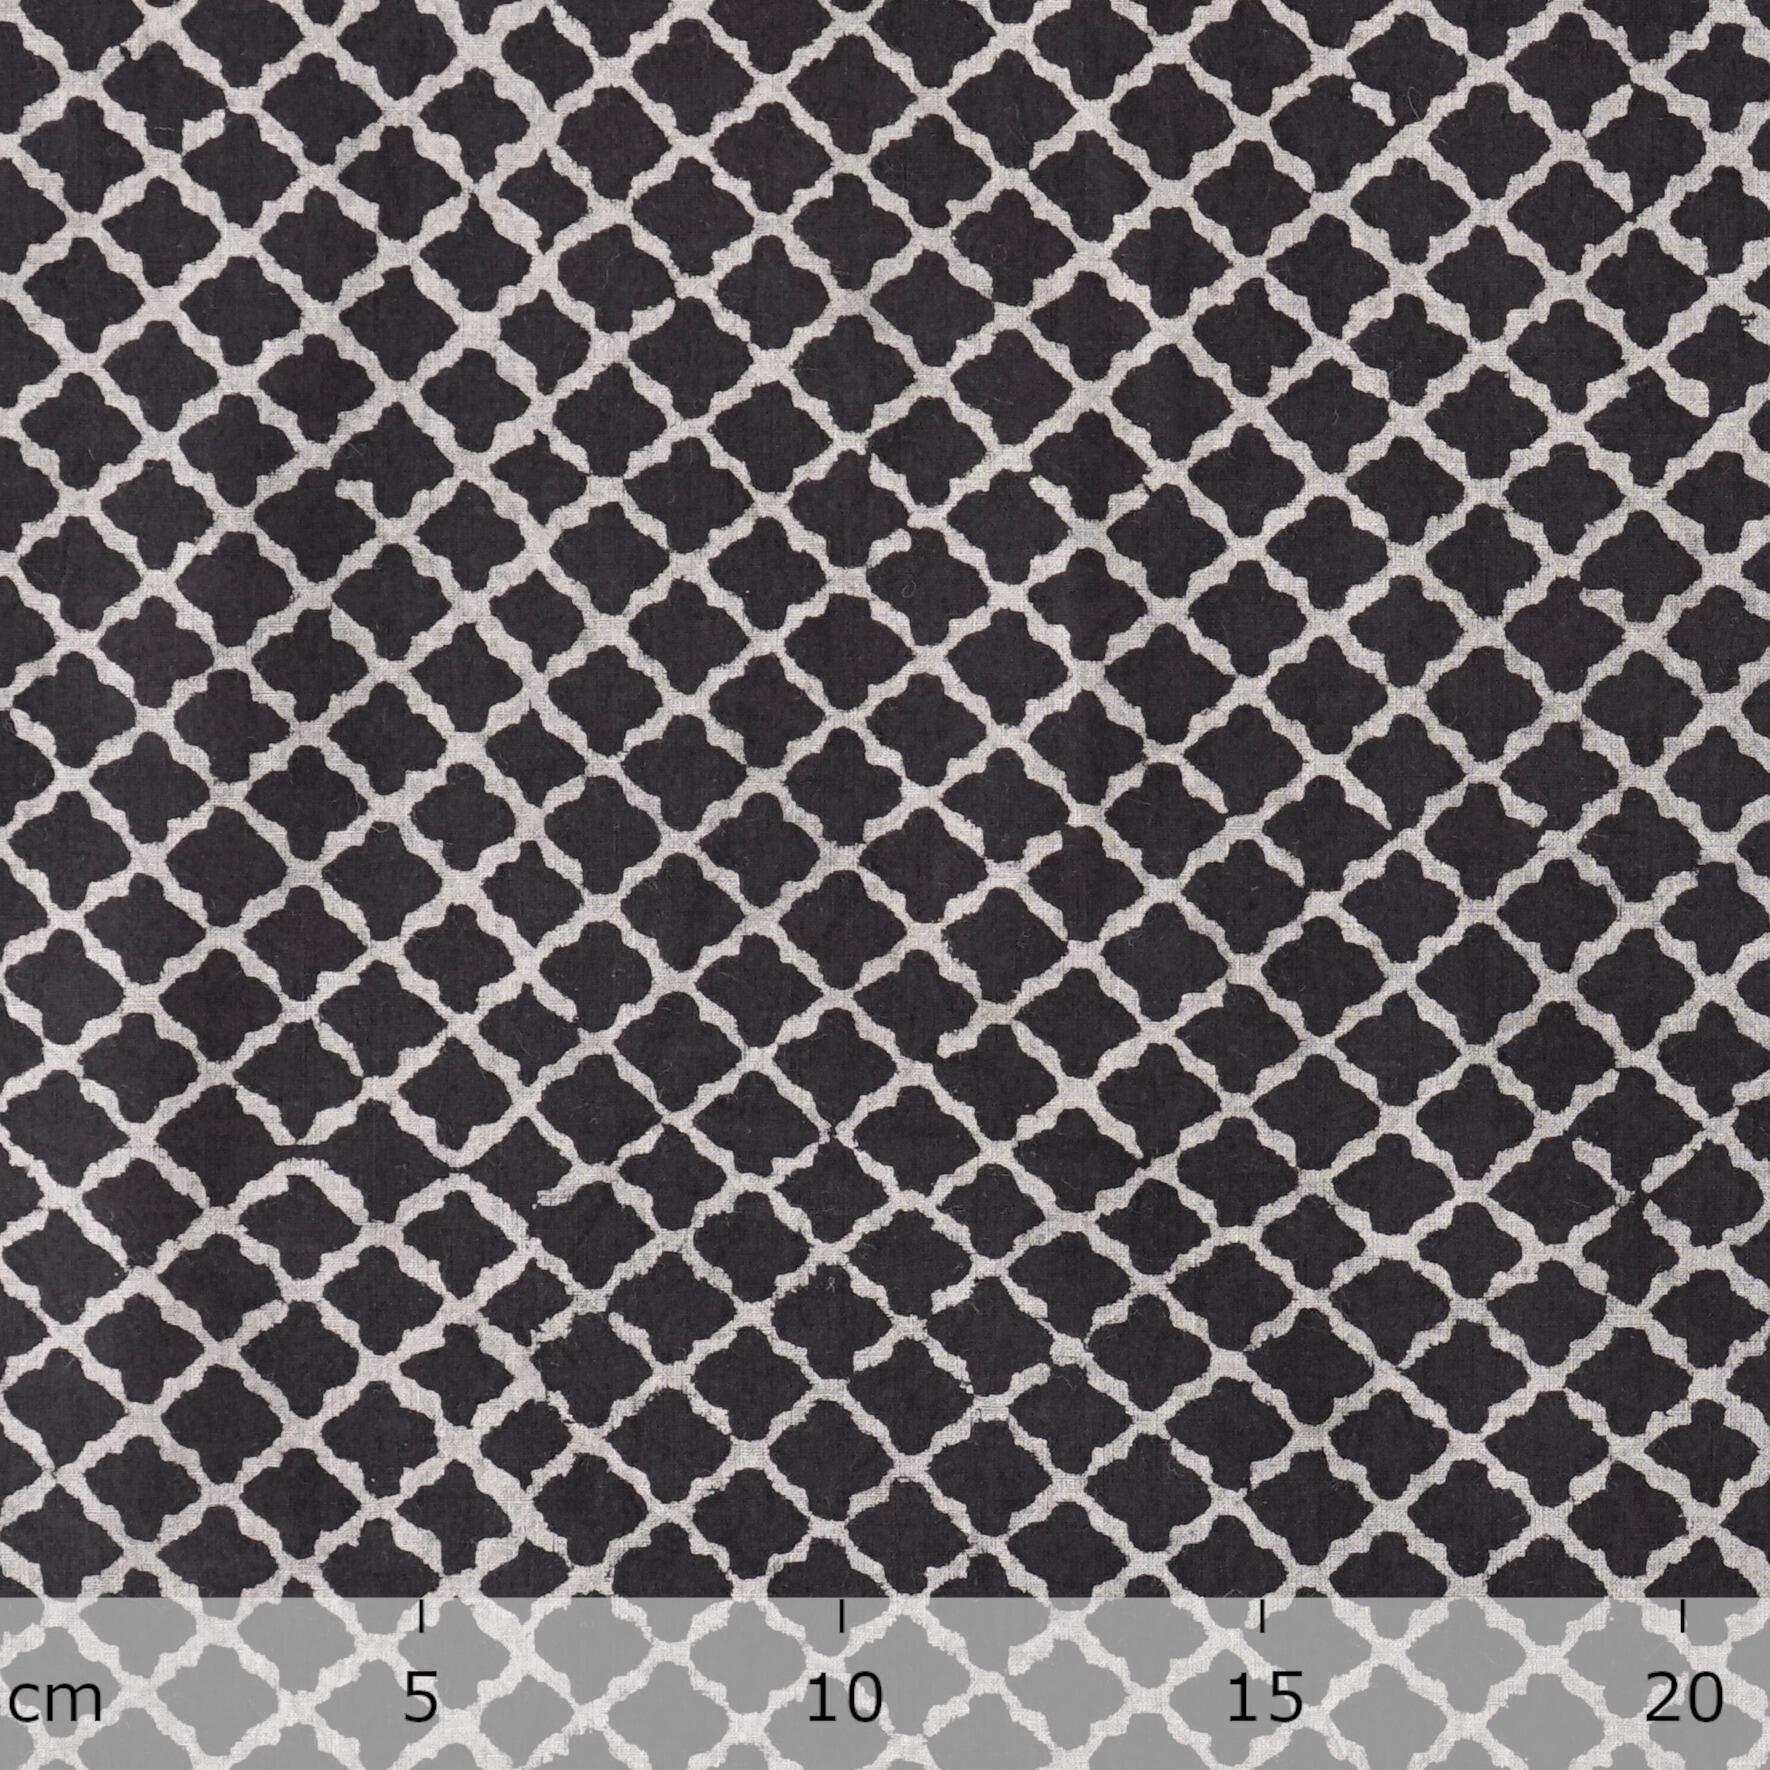 Block Printed Fabric, 100% Cotton, Ajrak Design: Iron Black Base, White Clover. Ruler